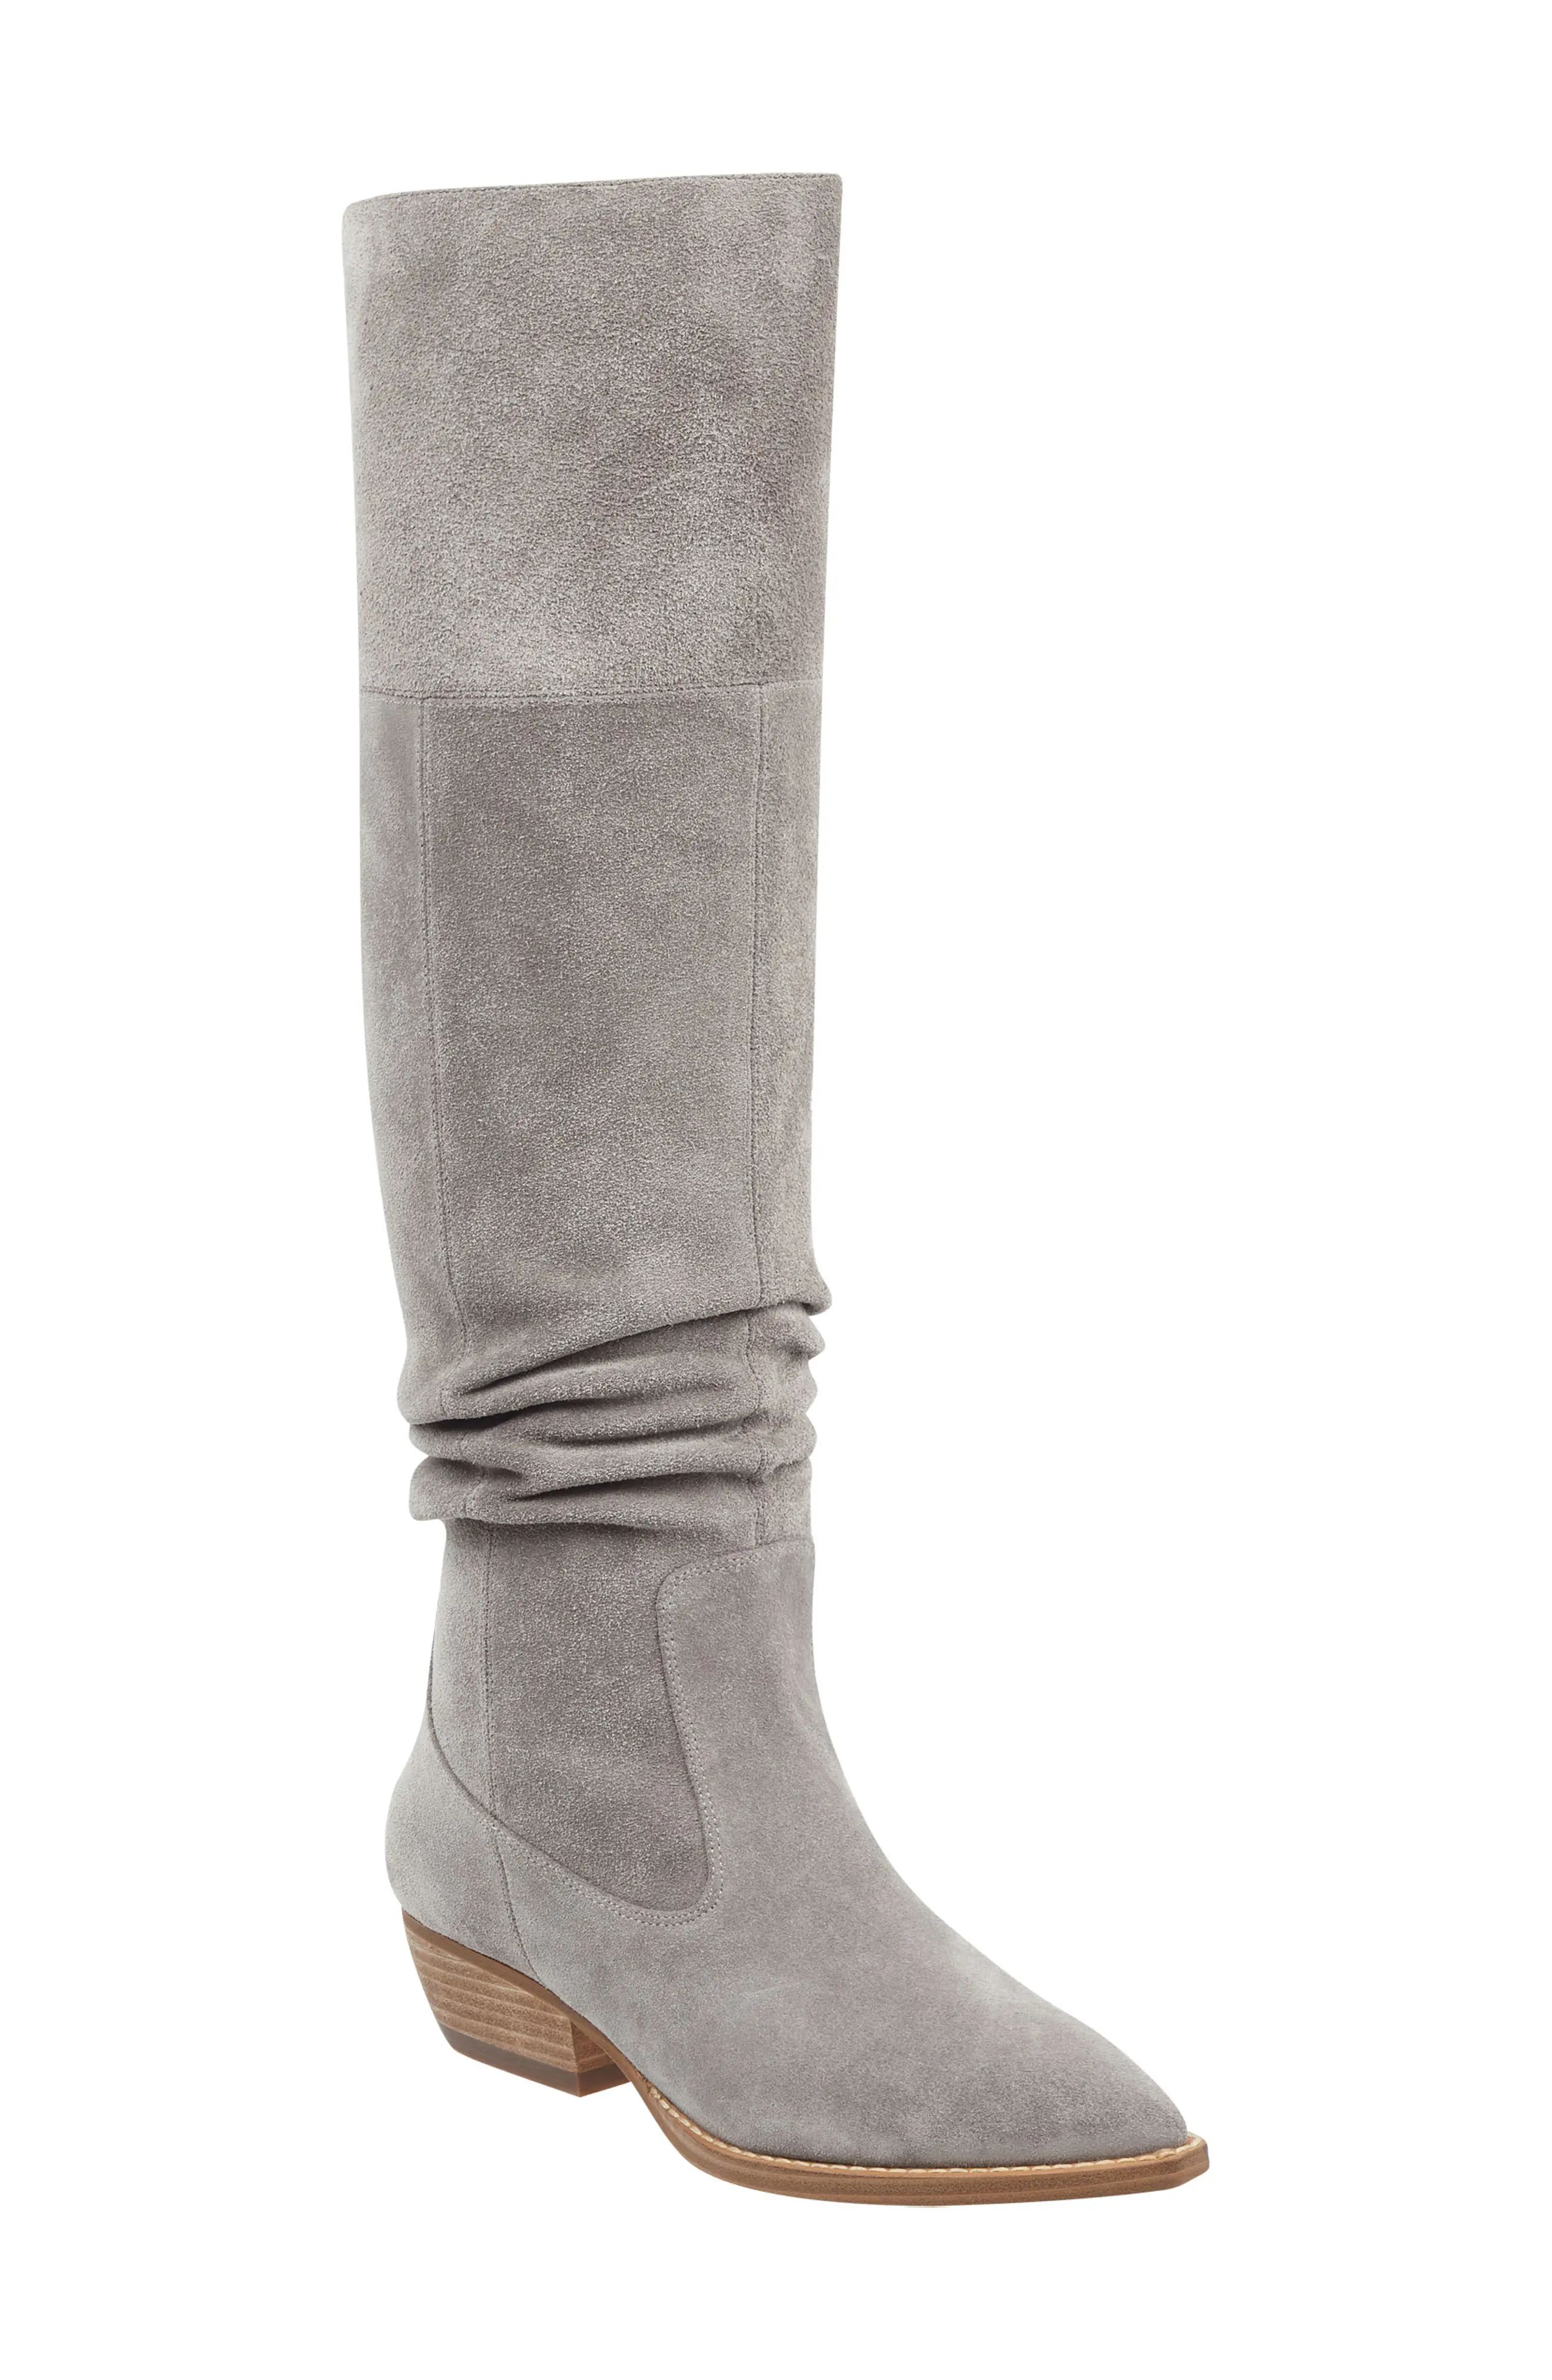 Women's Marc Fisher Ltd Ocea Over The Knee Boot, Size 6 M - Grey | Nordstrom